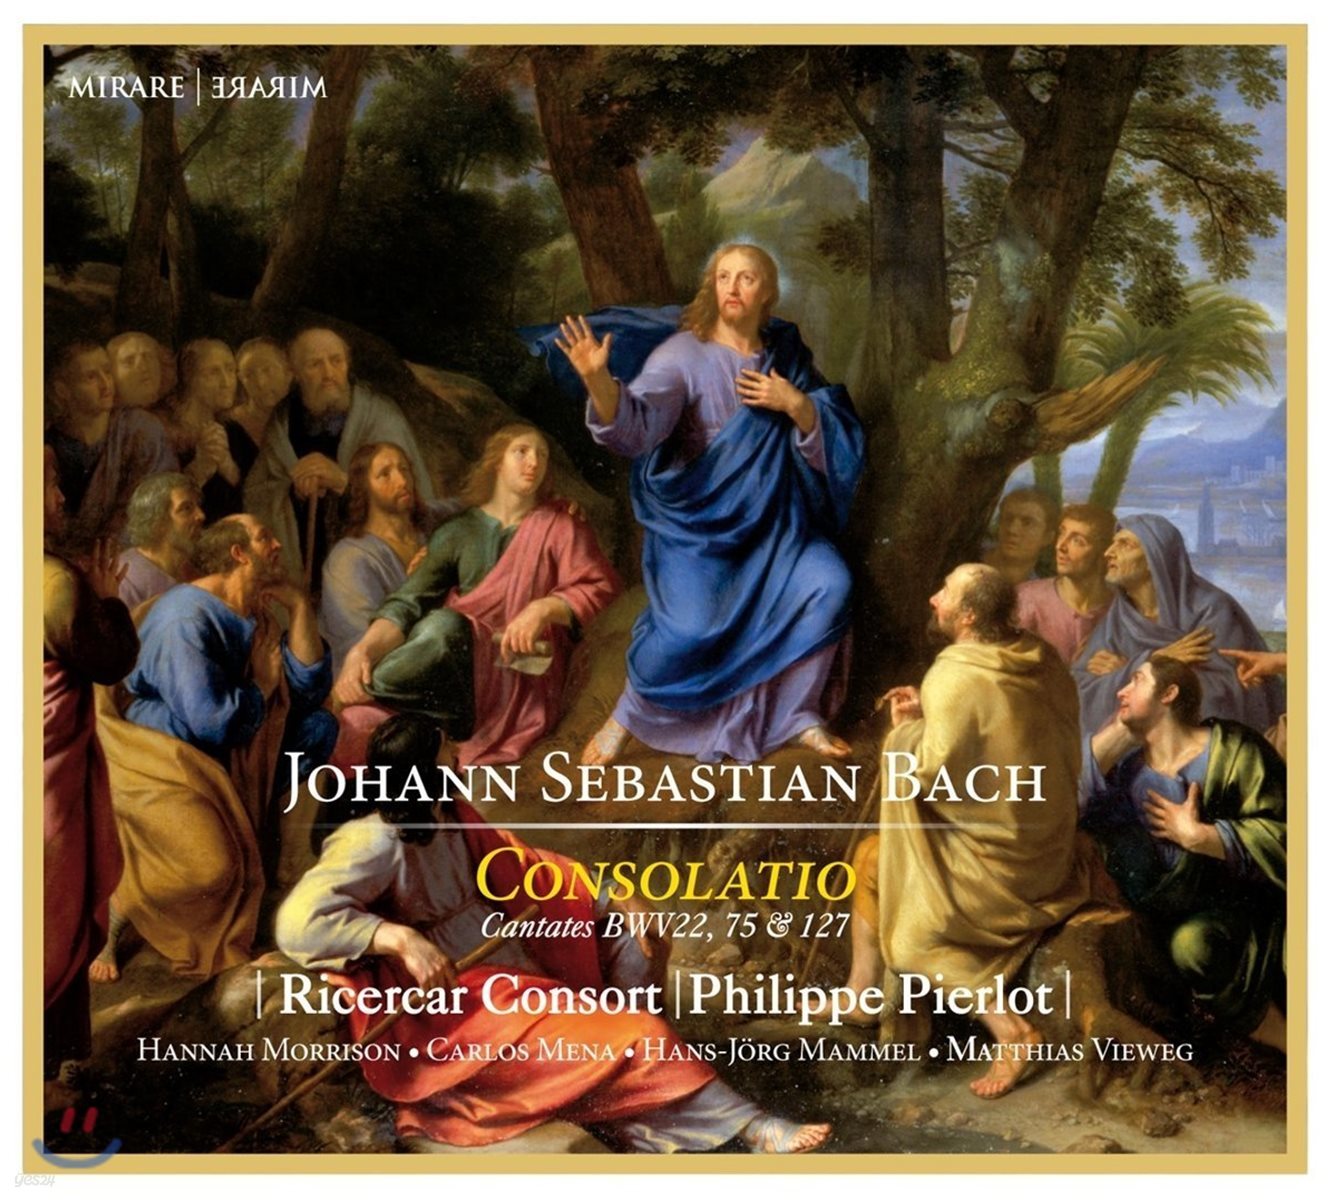 Ricercar Consort / Philippe Pierlot 바흐: 칸타타 - 콘솔라티오 (J.S. Bach: Consolatio - Cantatas BWV22, 75 & 127)